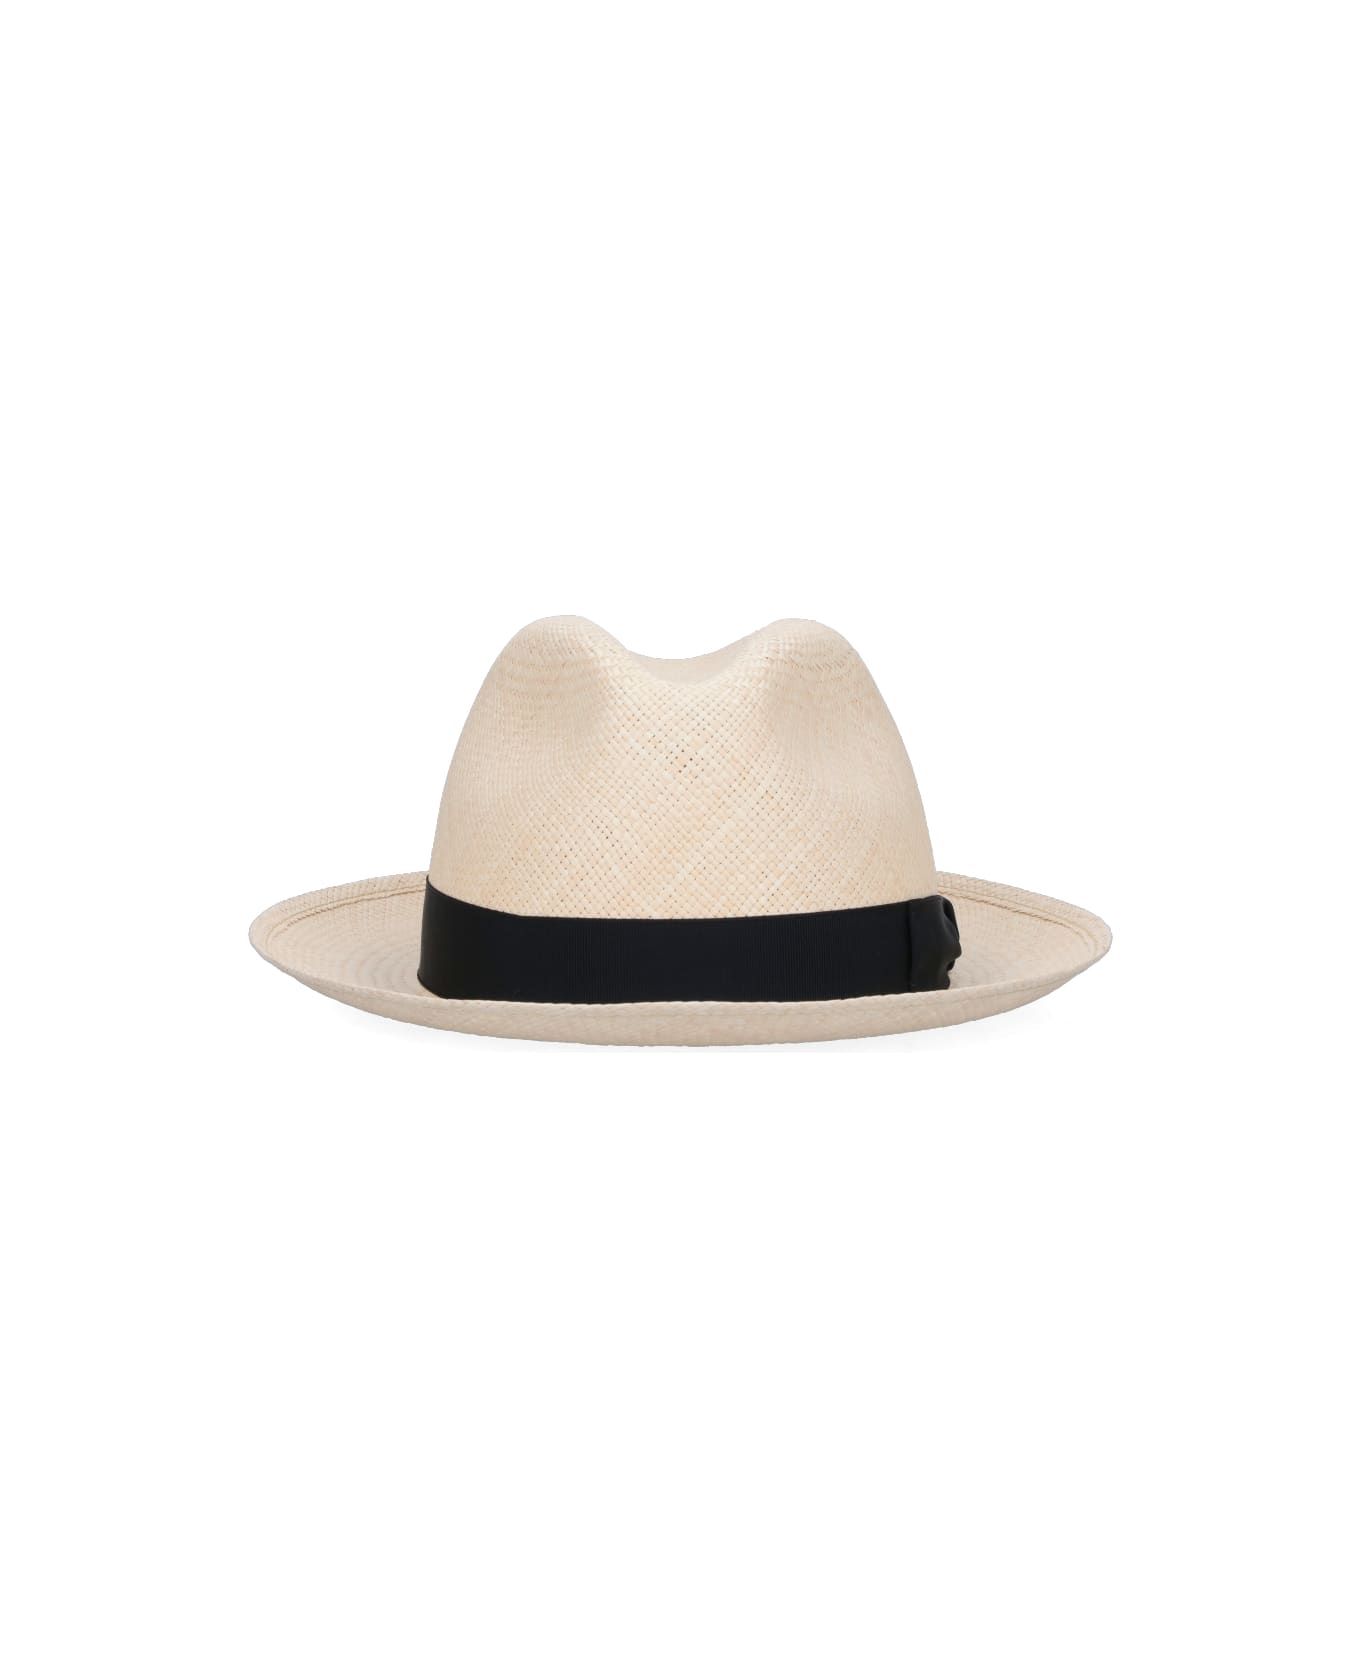 Borsalino 'panama' Hat - Beige 帽子